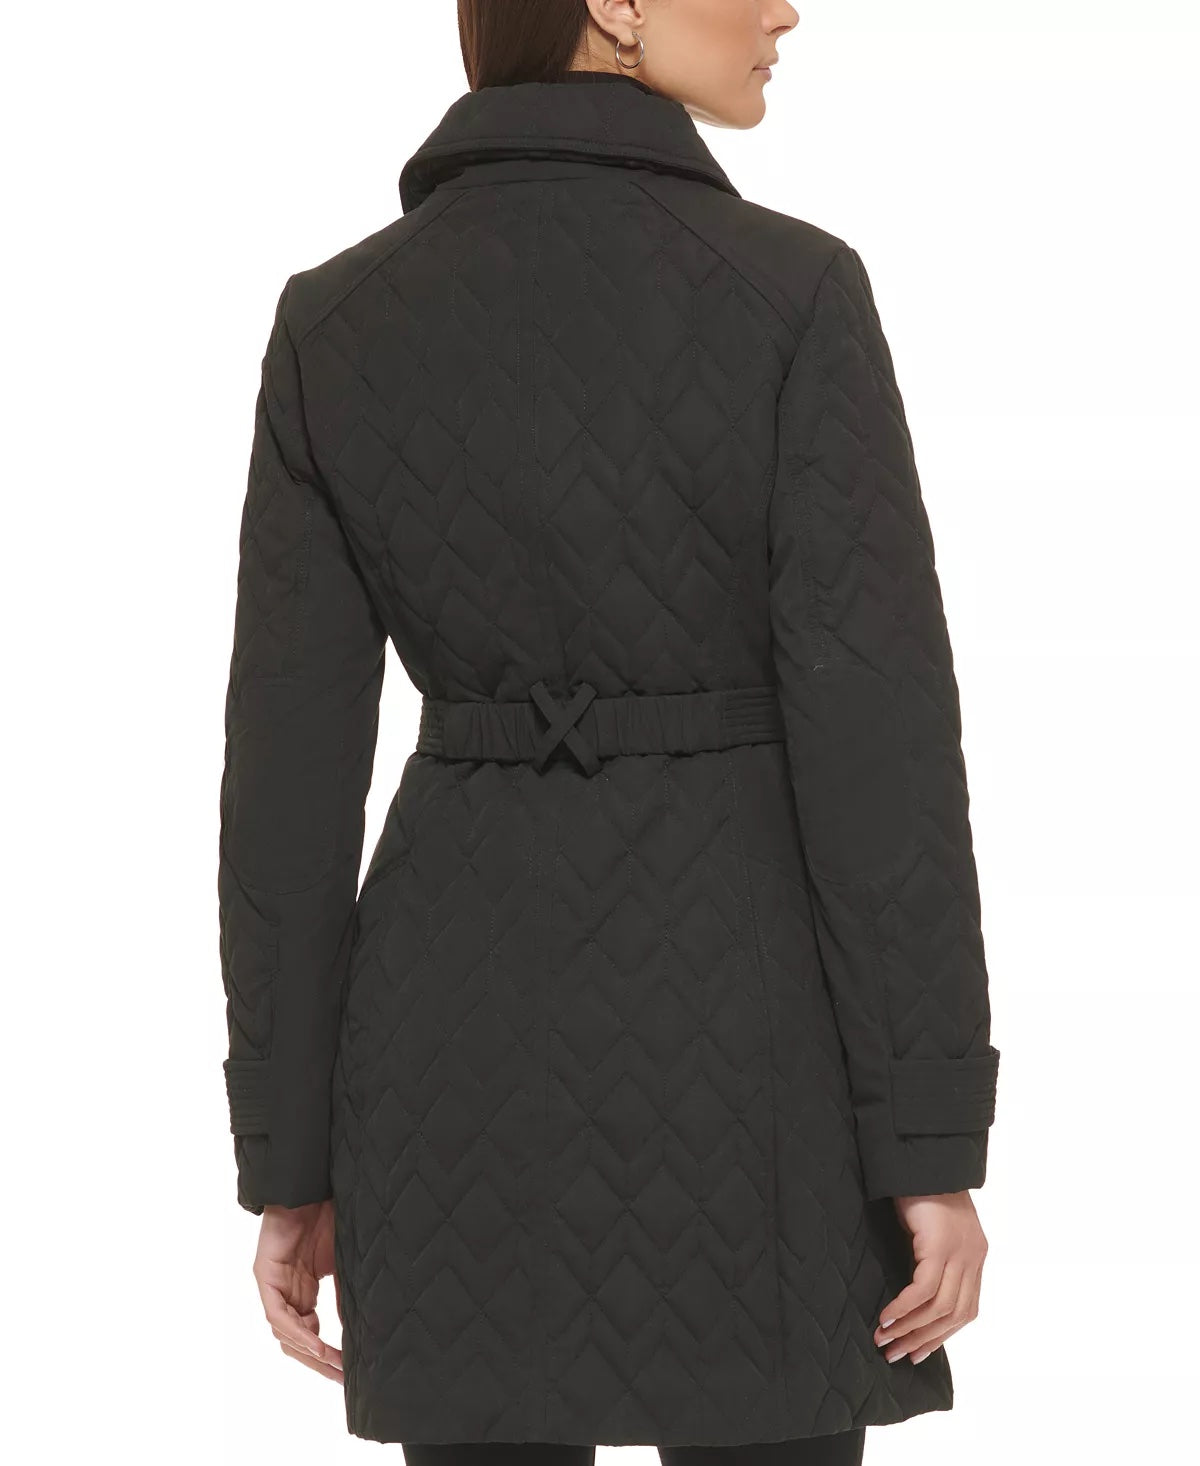 GUESS Women's Asymmetric Diamond-Quilted Coat Black XL